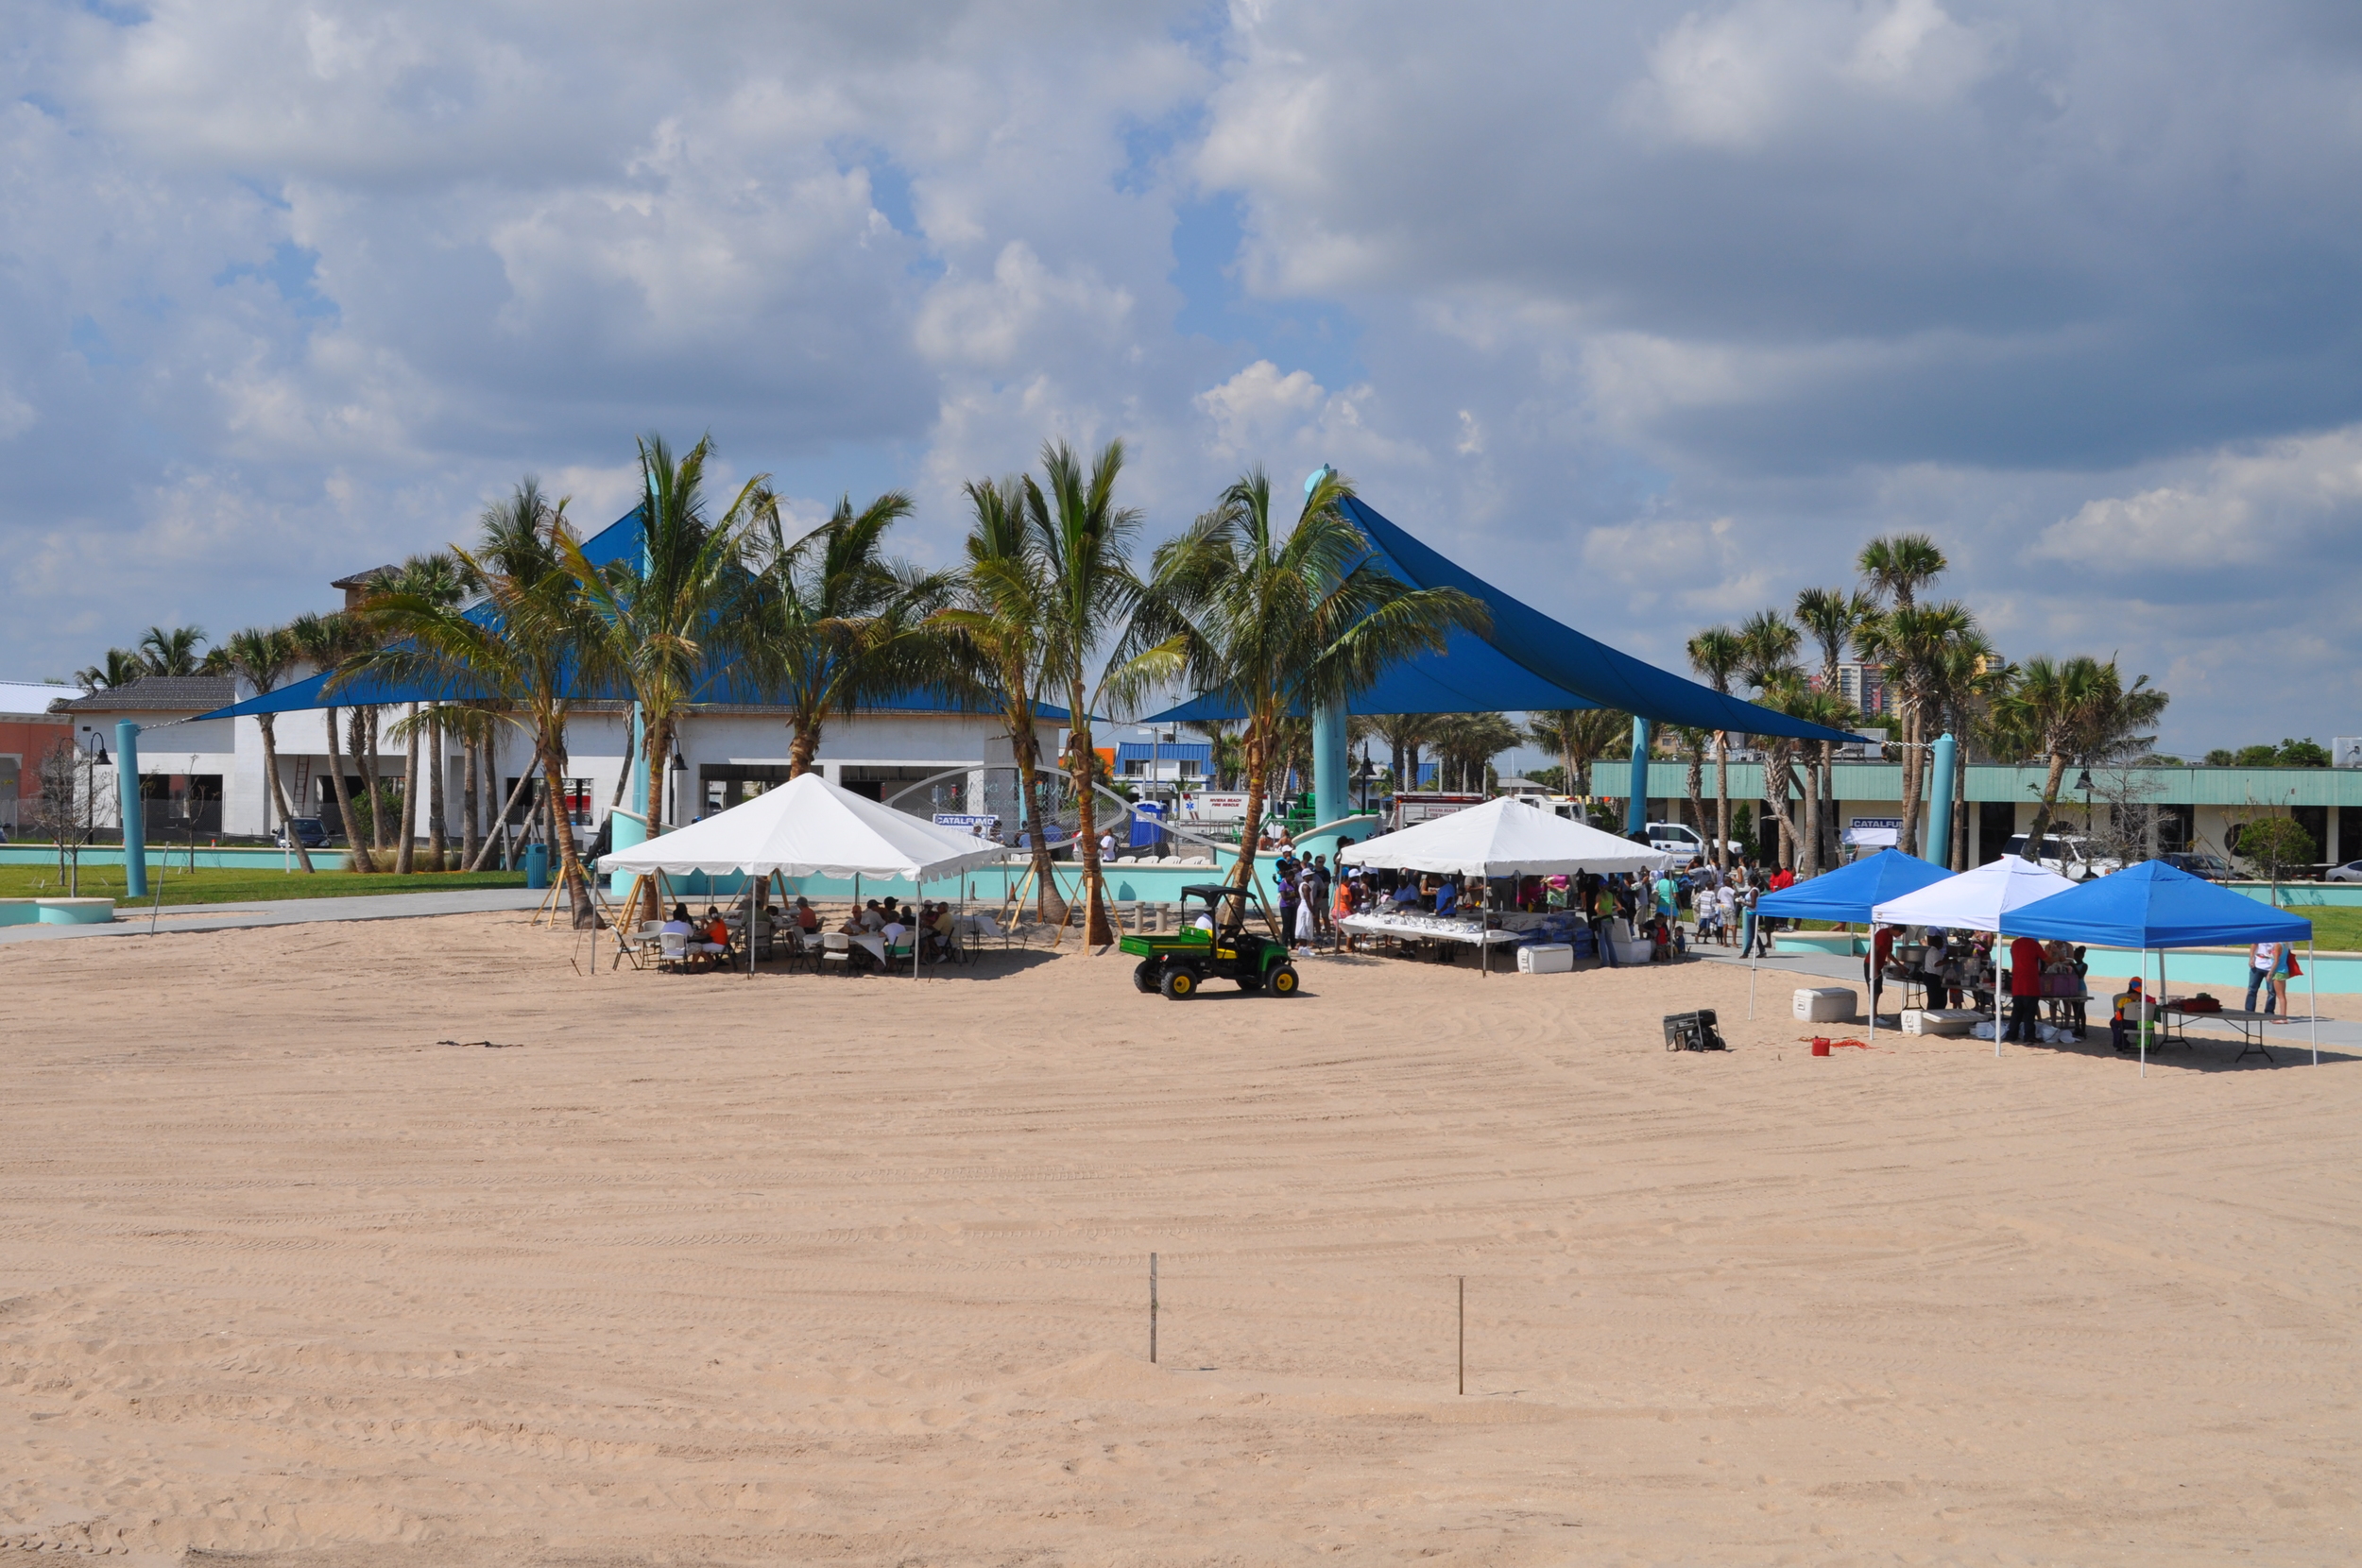 City of Riviera Beach Municipal Beach Park Ocean Mall Beach events.jpg